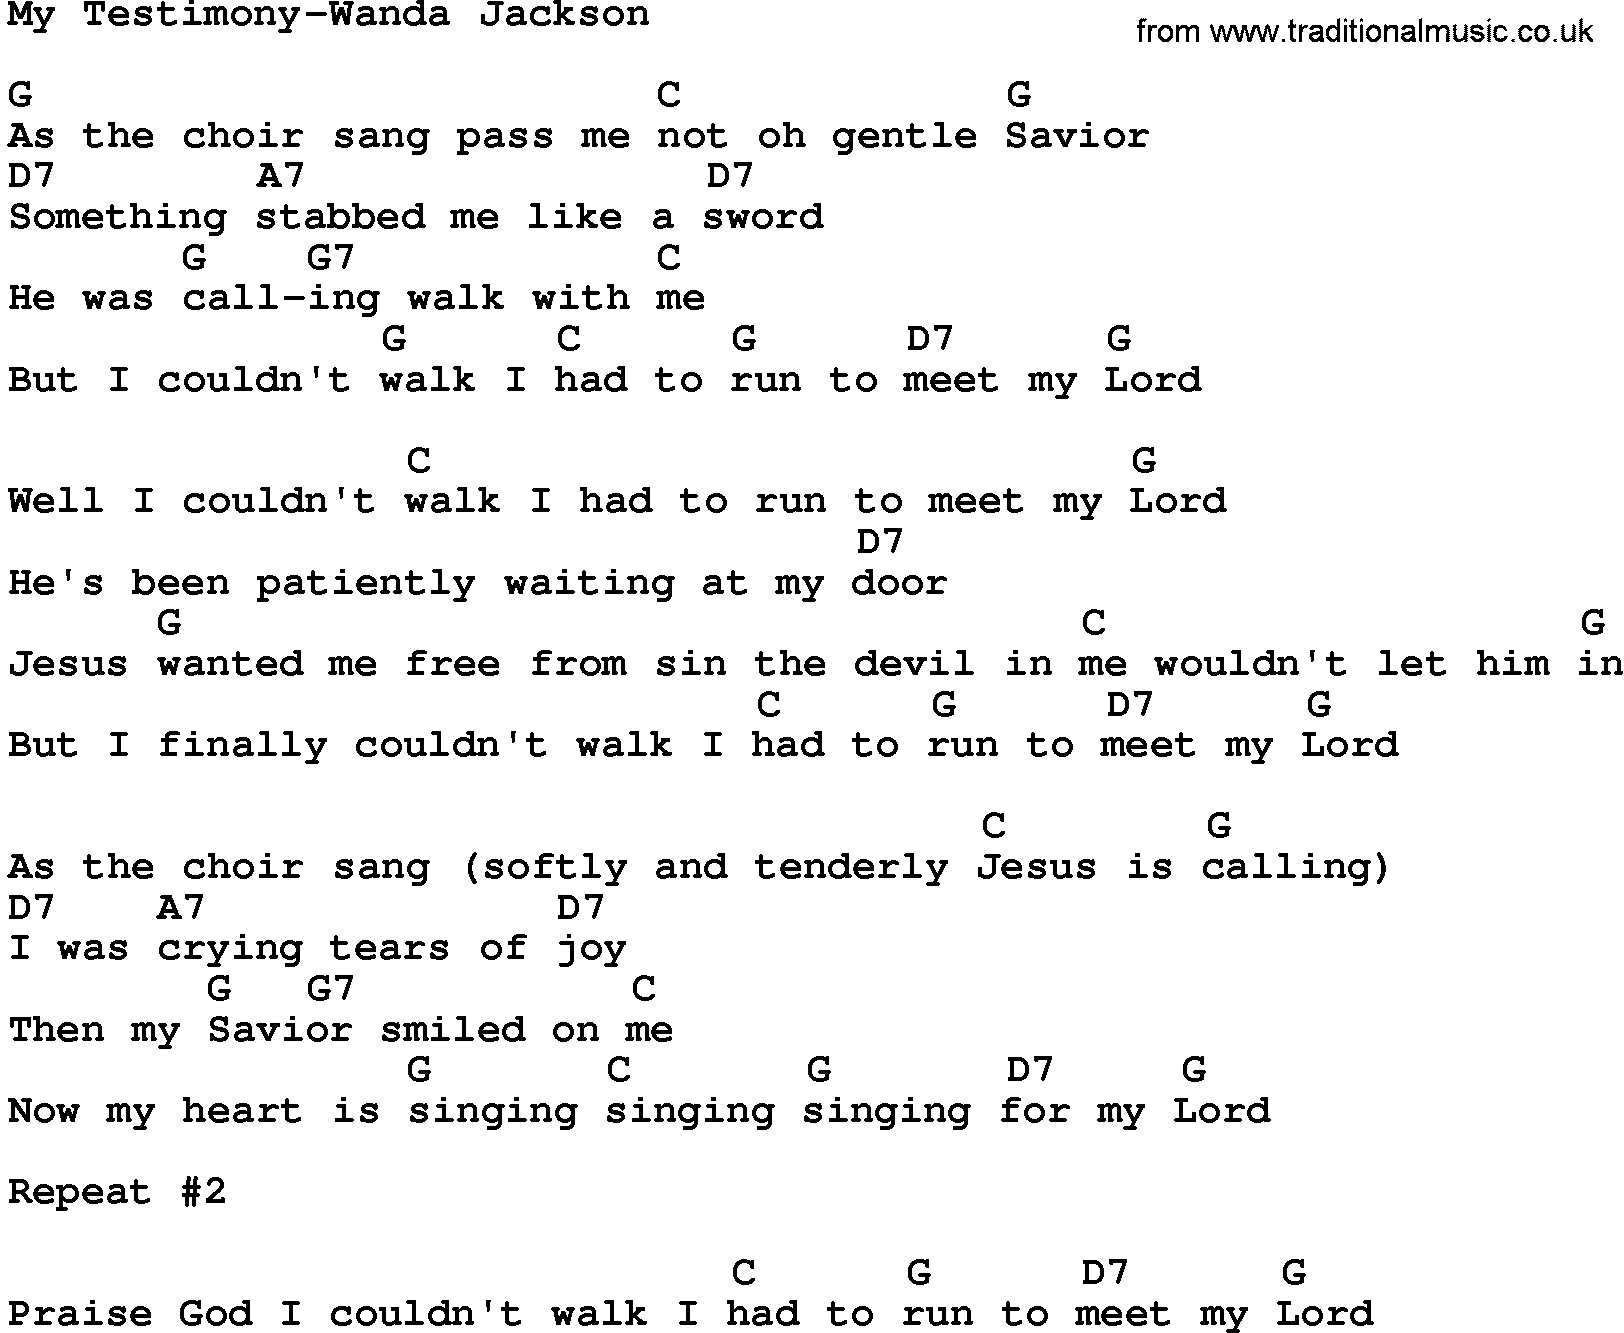 Country music song: My Testimony-Wanda Jackson lyrics and chords